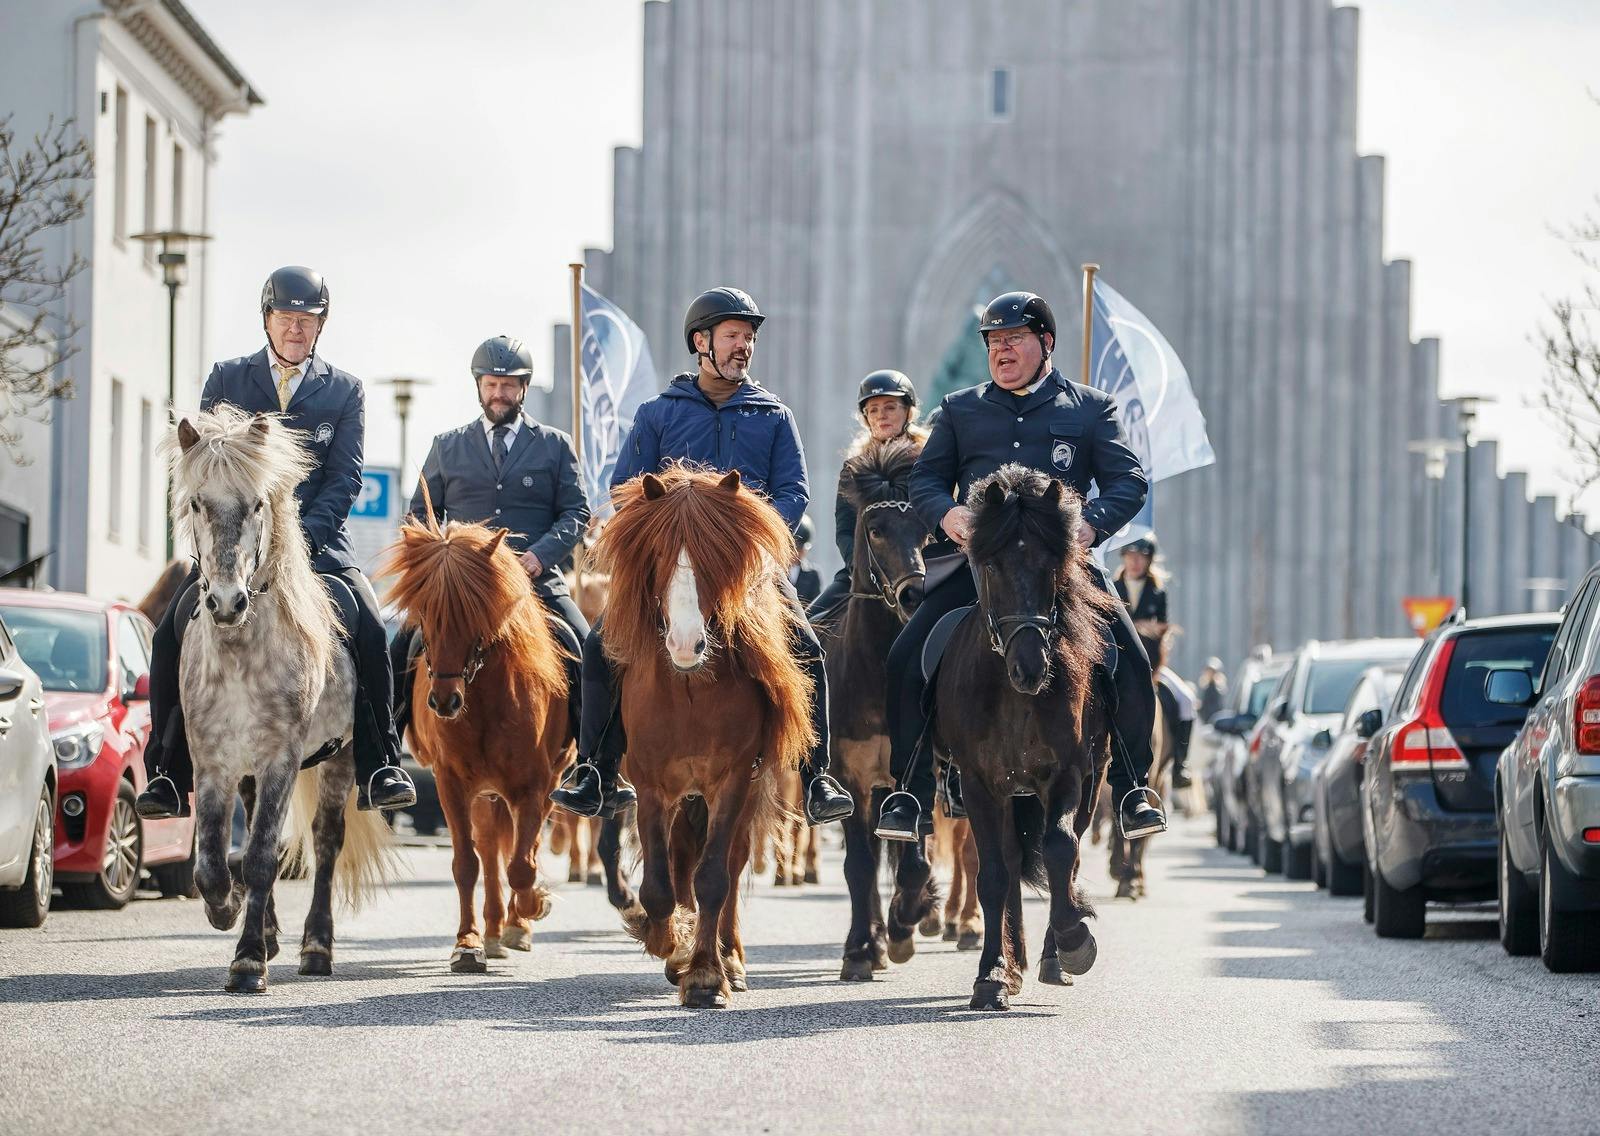 Dagur B. Eggertsson, mayor of Reykjavík, riding an Icelandic horse down the streets of the capital alongside other riders